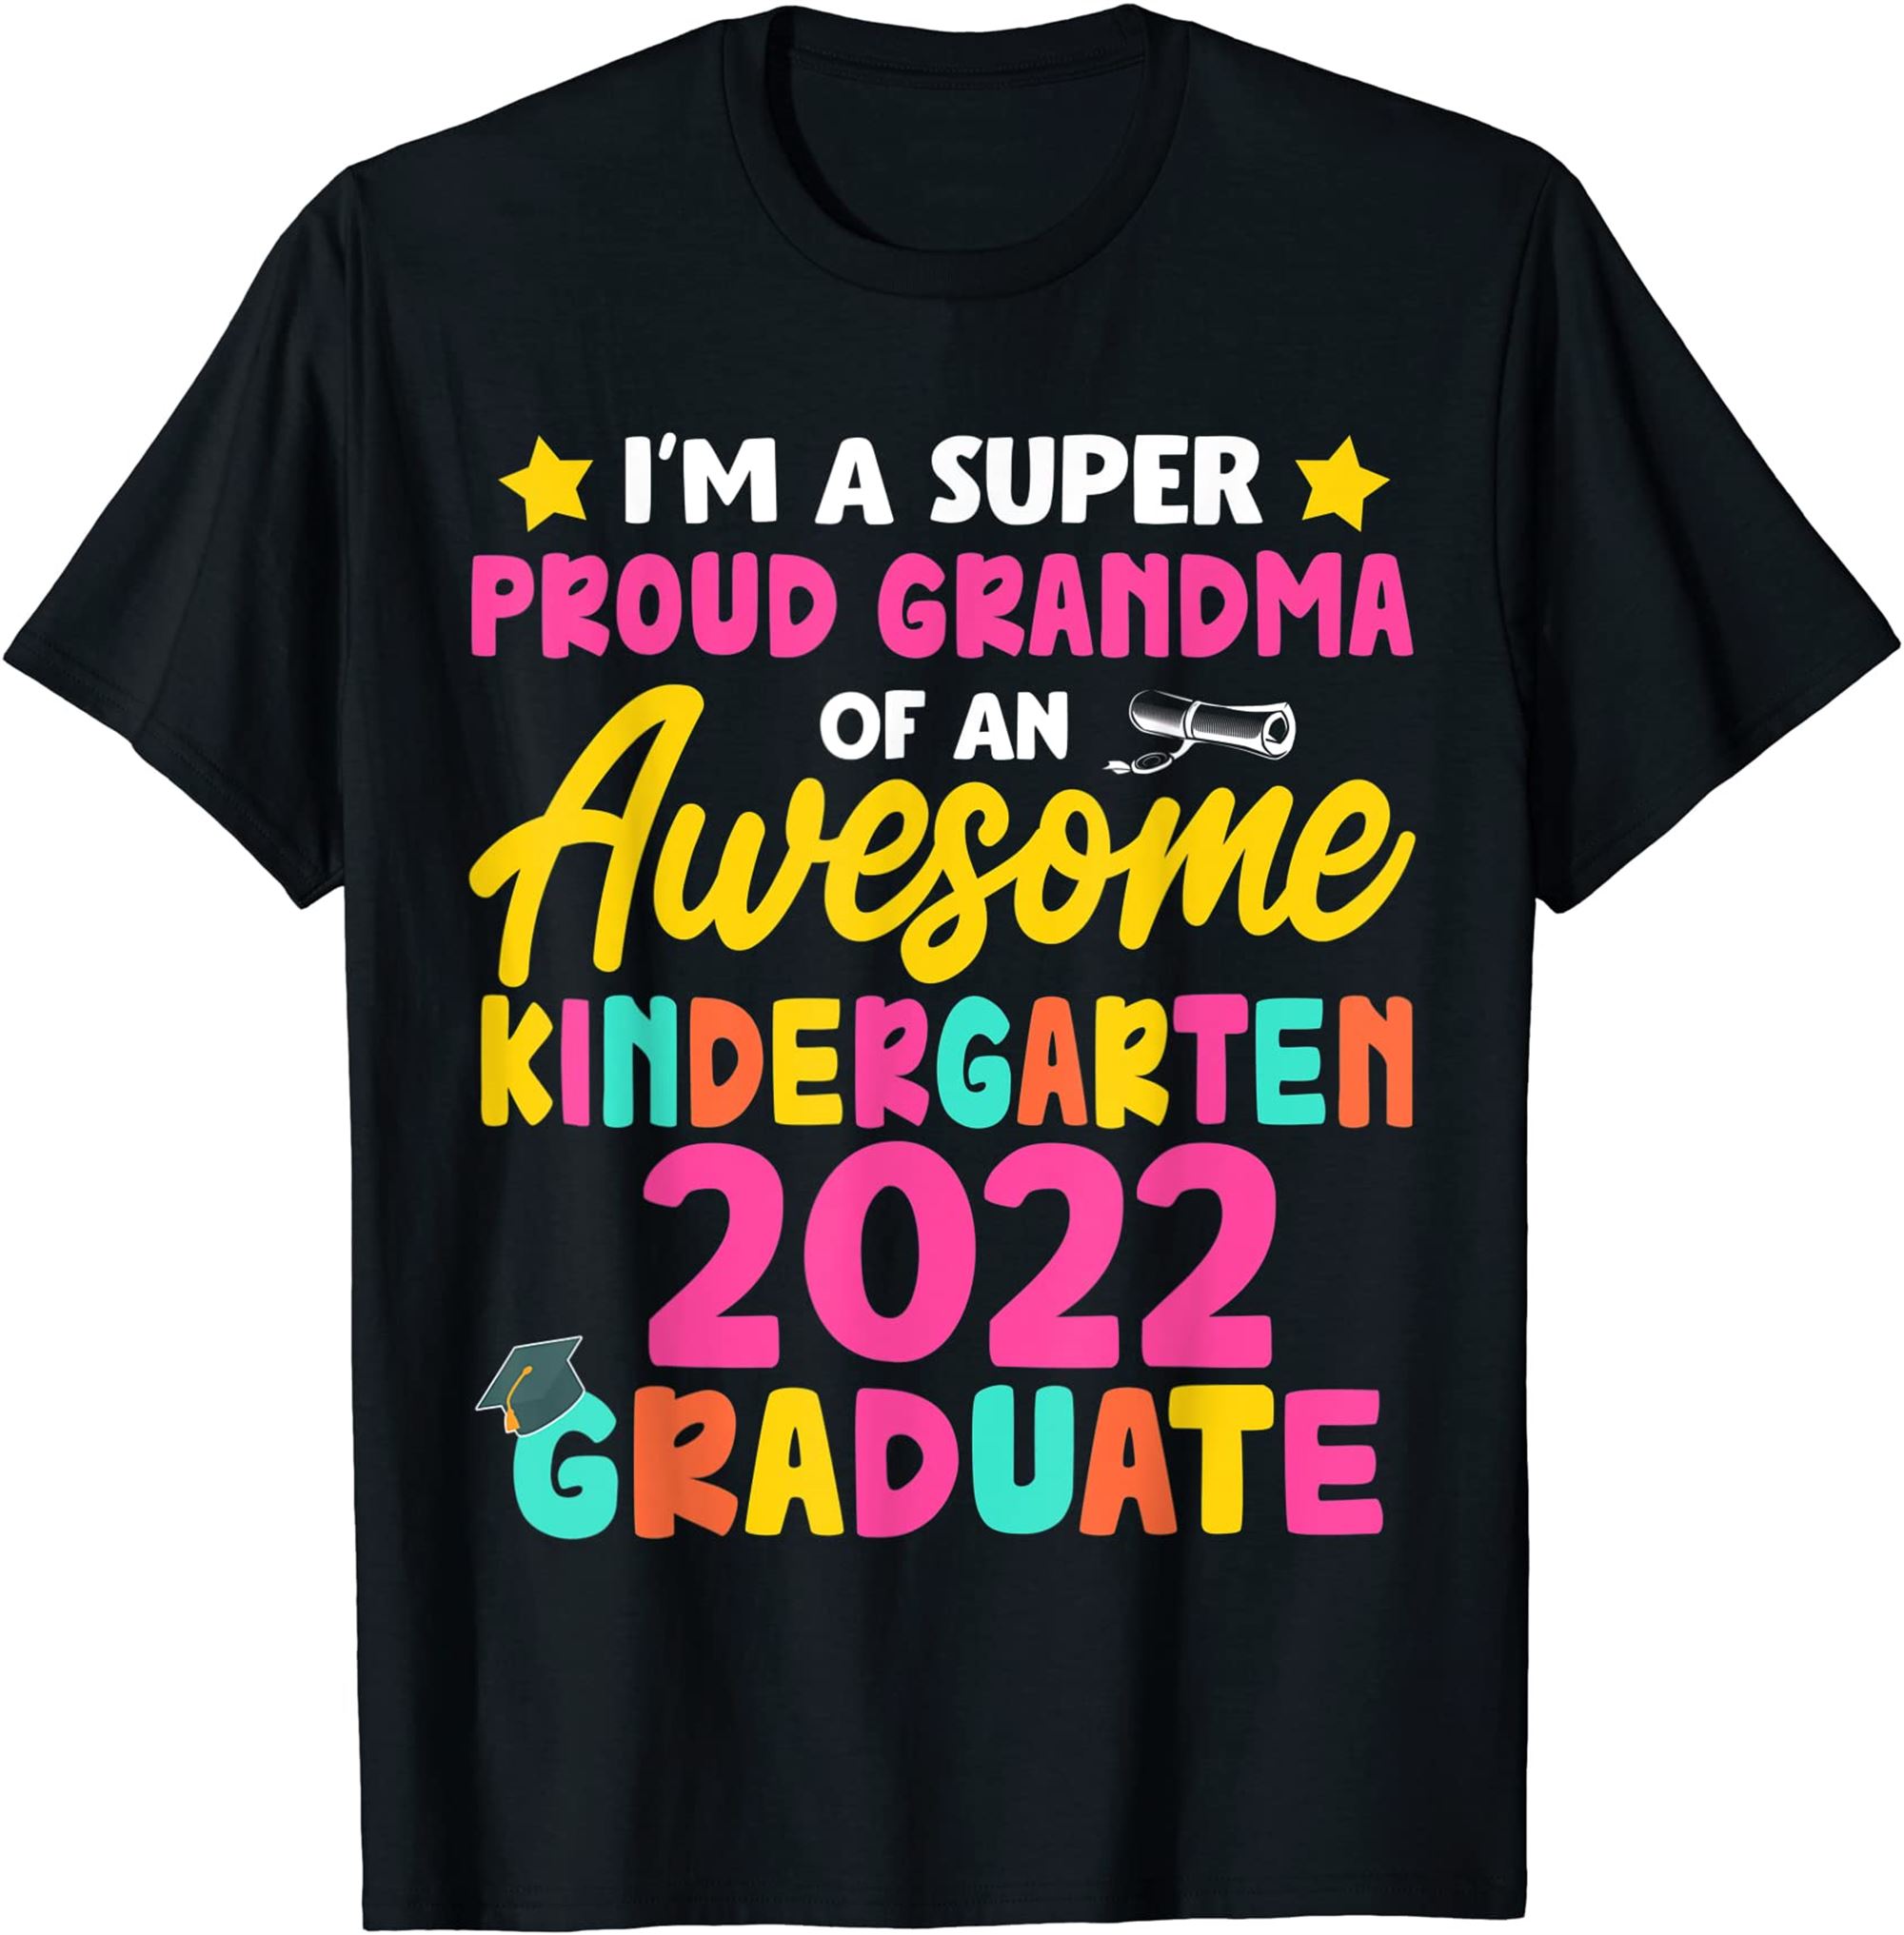 Proud Grandma Class Of 2022 Kindergarten Graduation T-shirt Size Up To 5xl